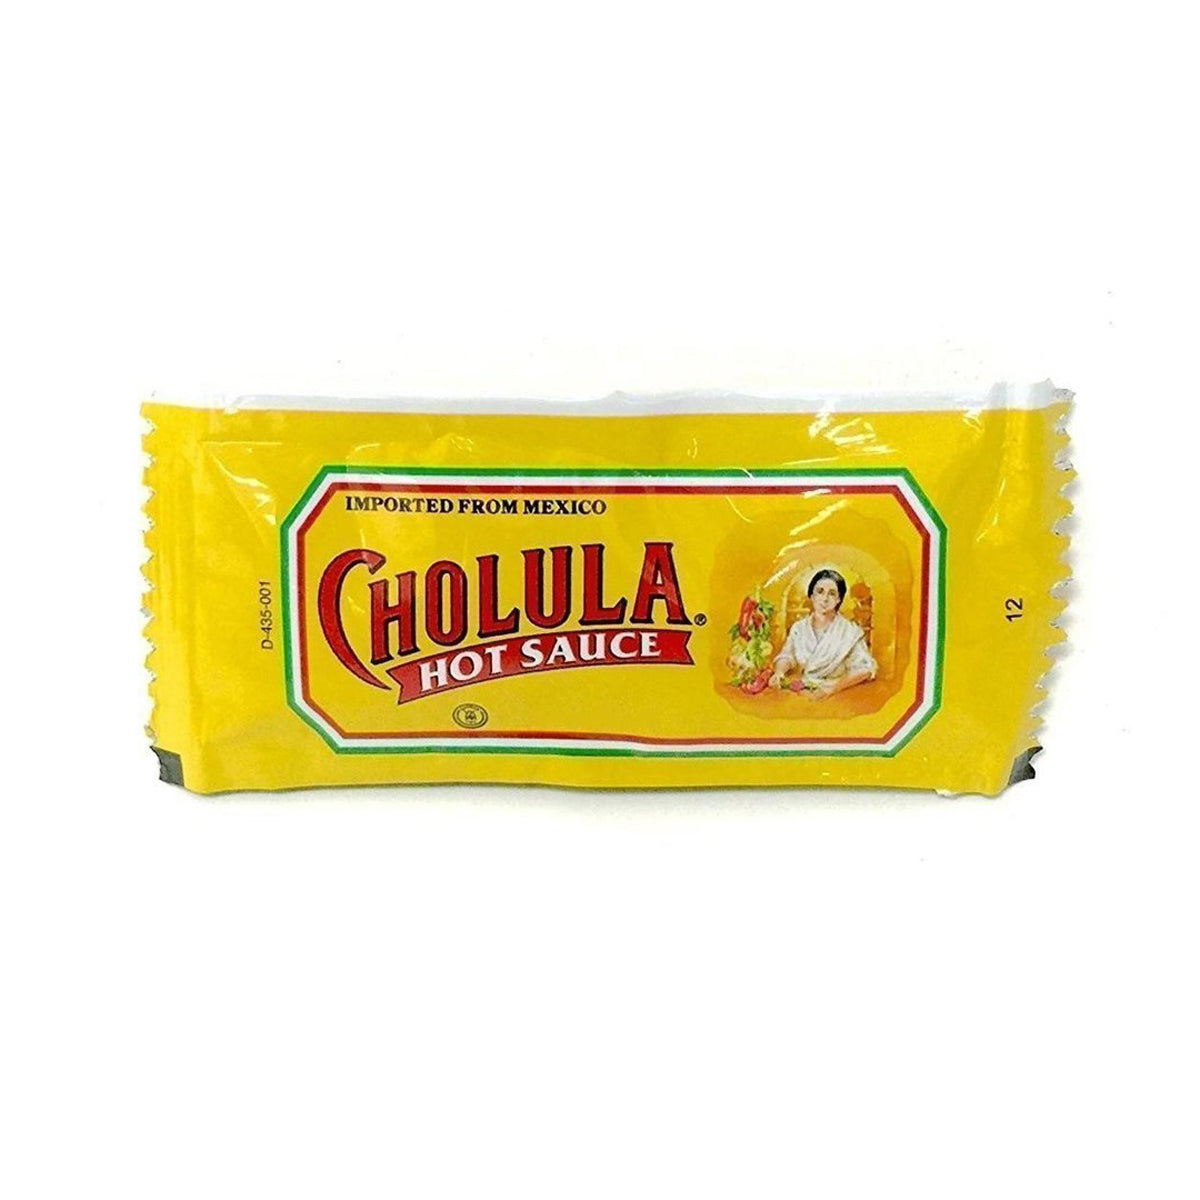 Cholula Hot Sauce Packets .25 OZ